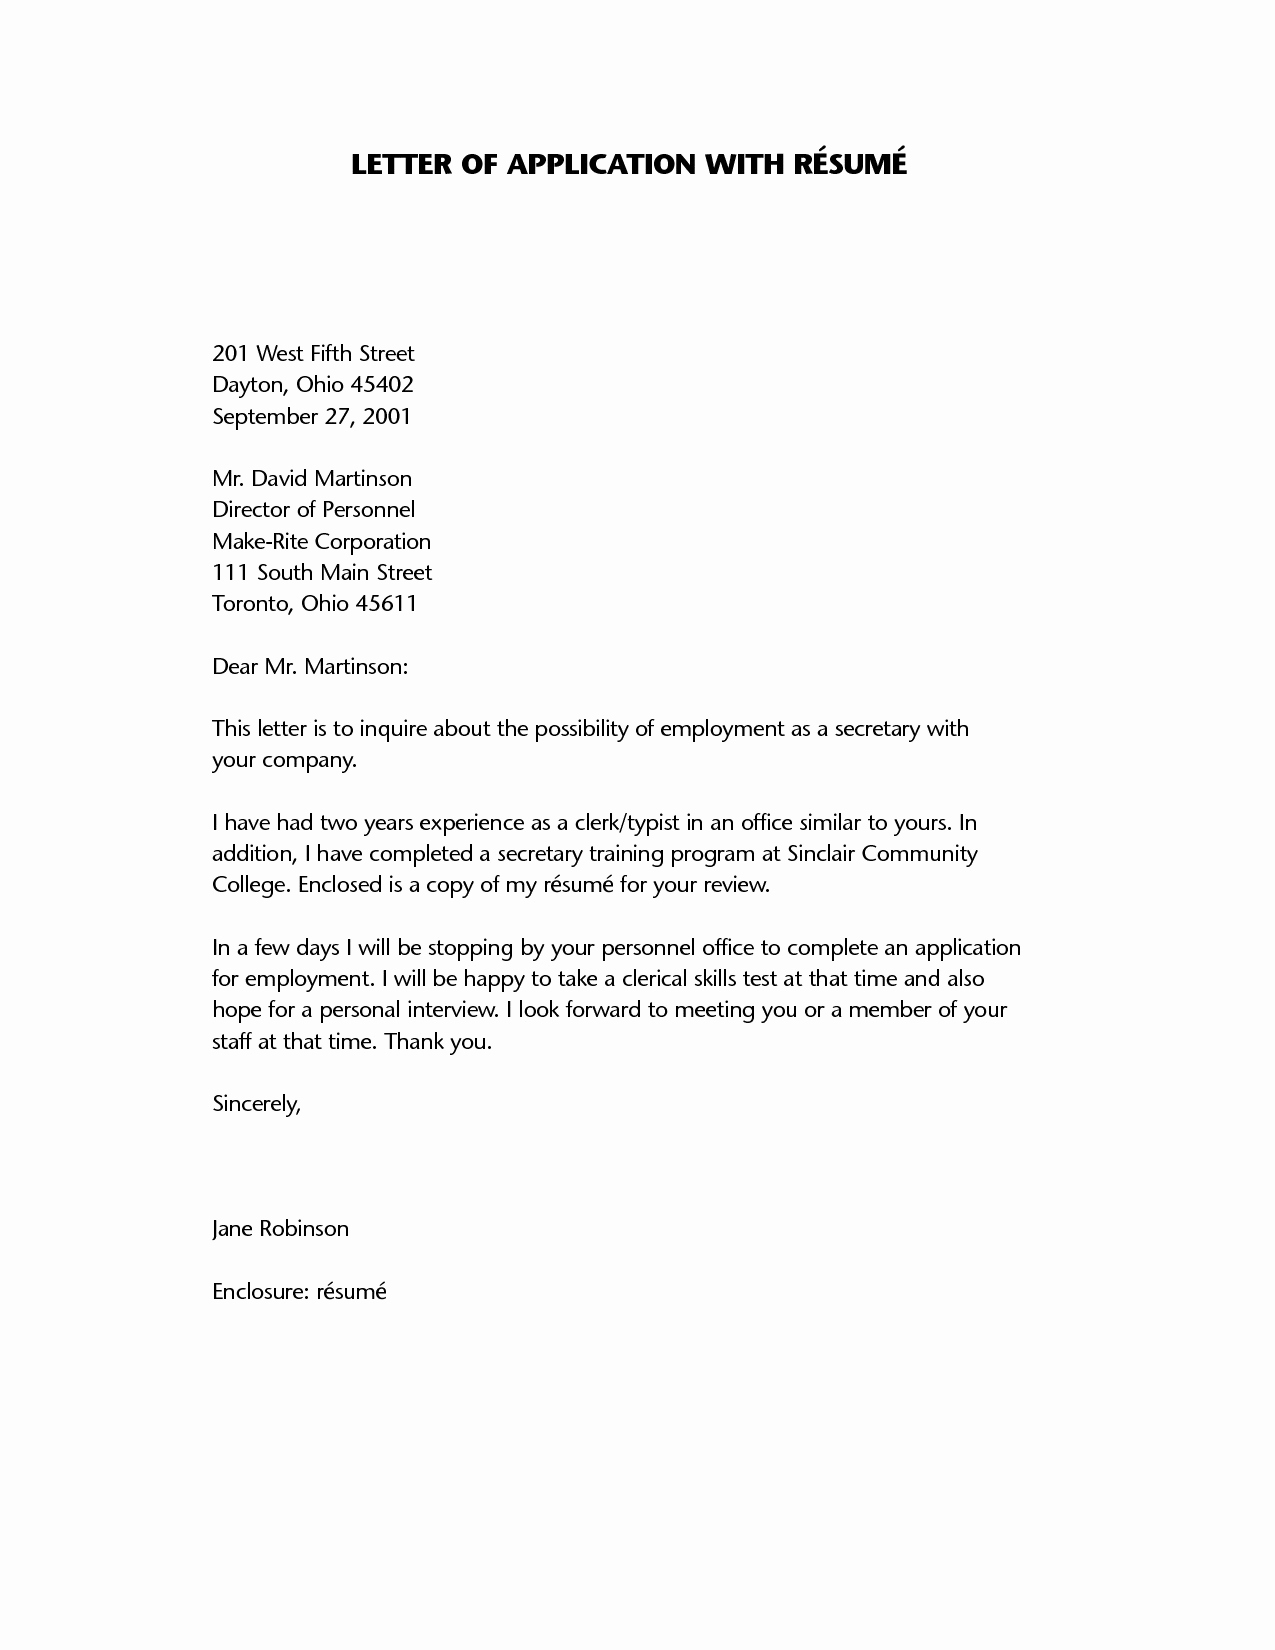 Completion Letter Template - Application Letter for Employment New Model Cover Letter Lovely